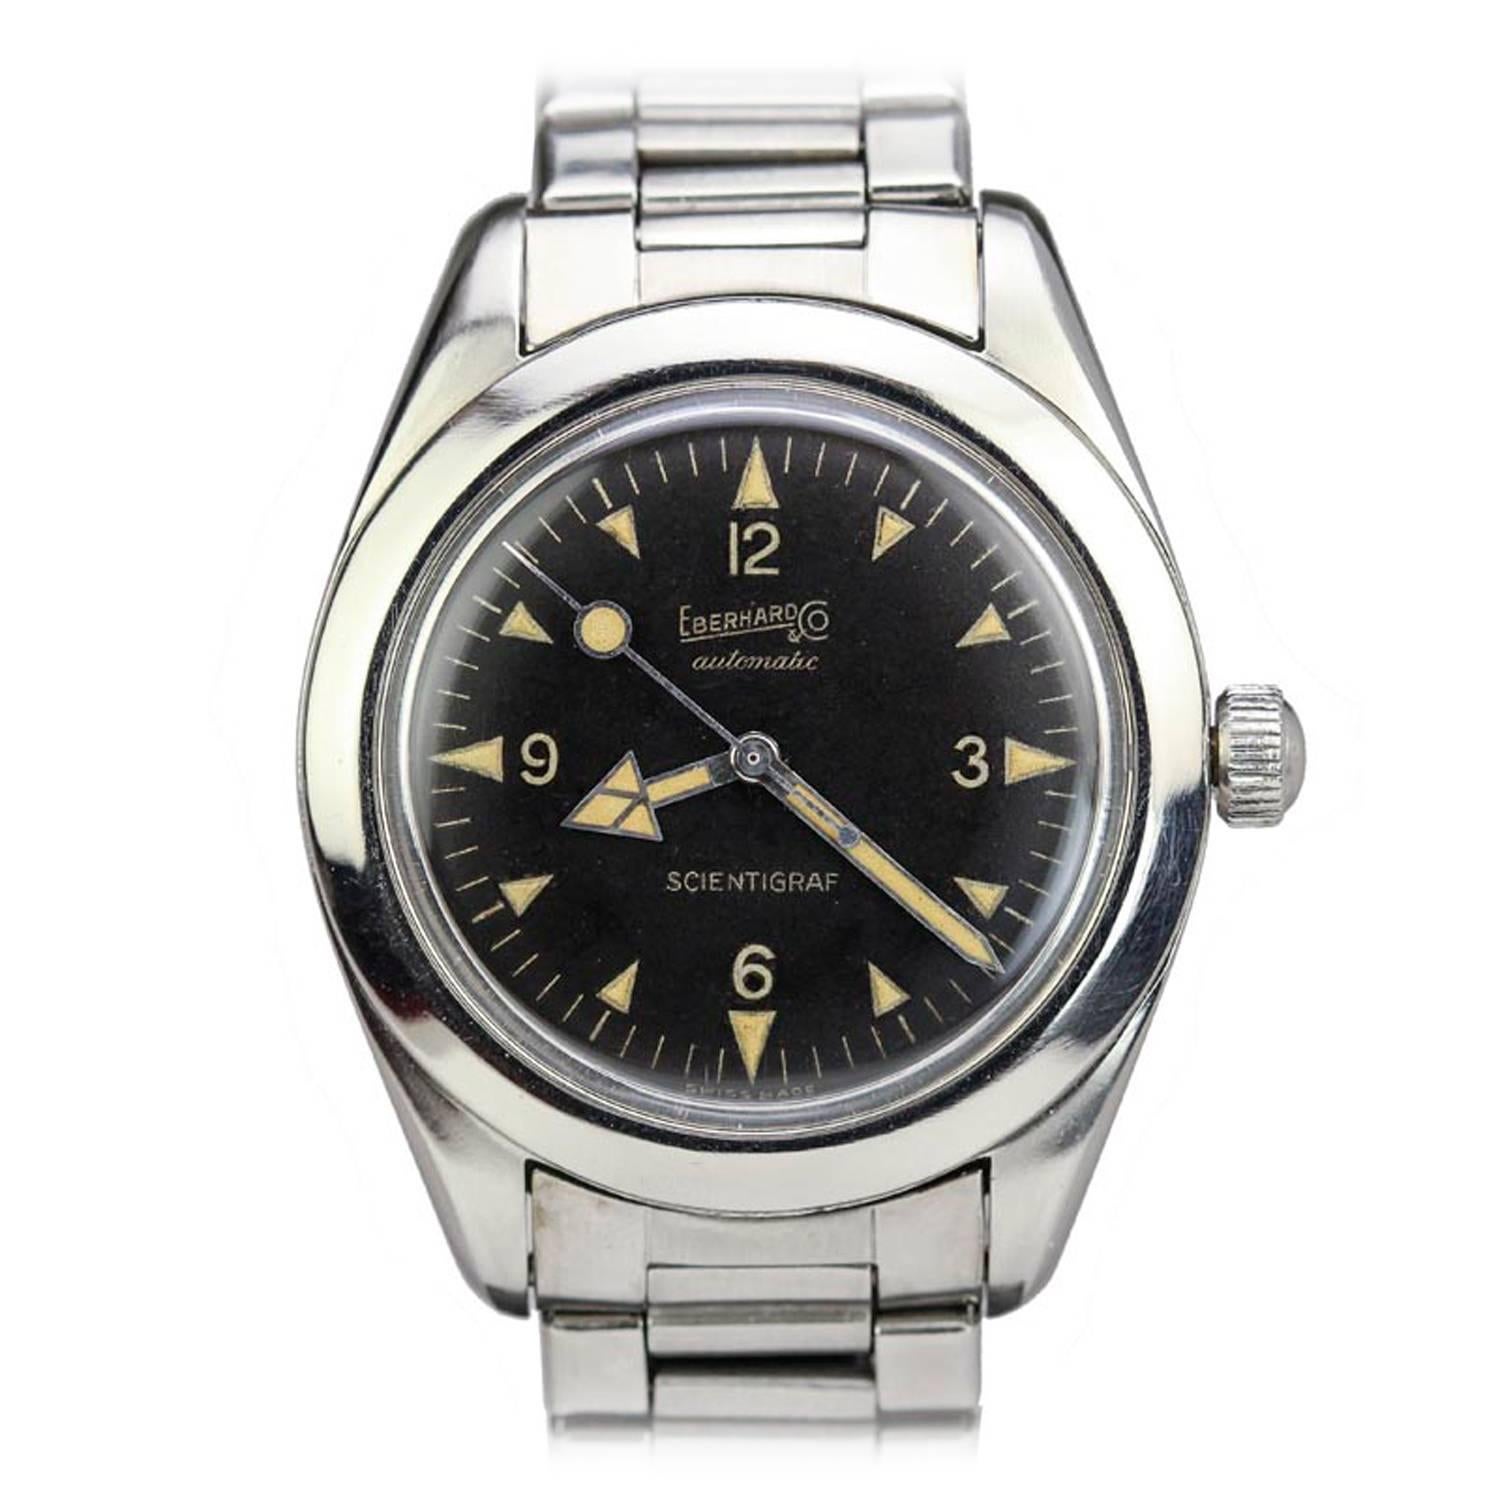 Eberhard & Co. Stainless Steel Scientigraf Wristwatch